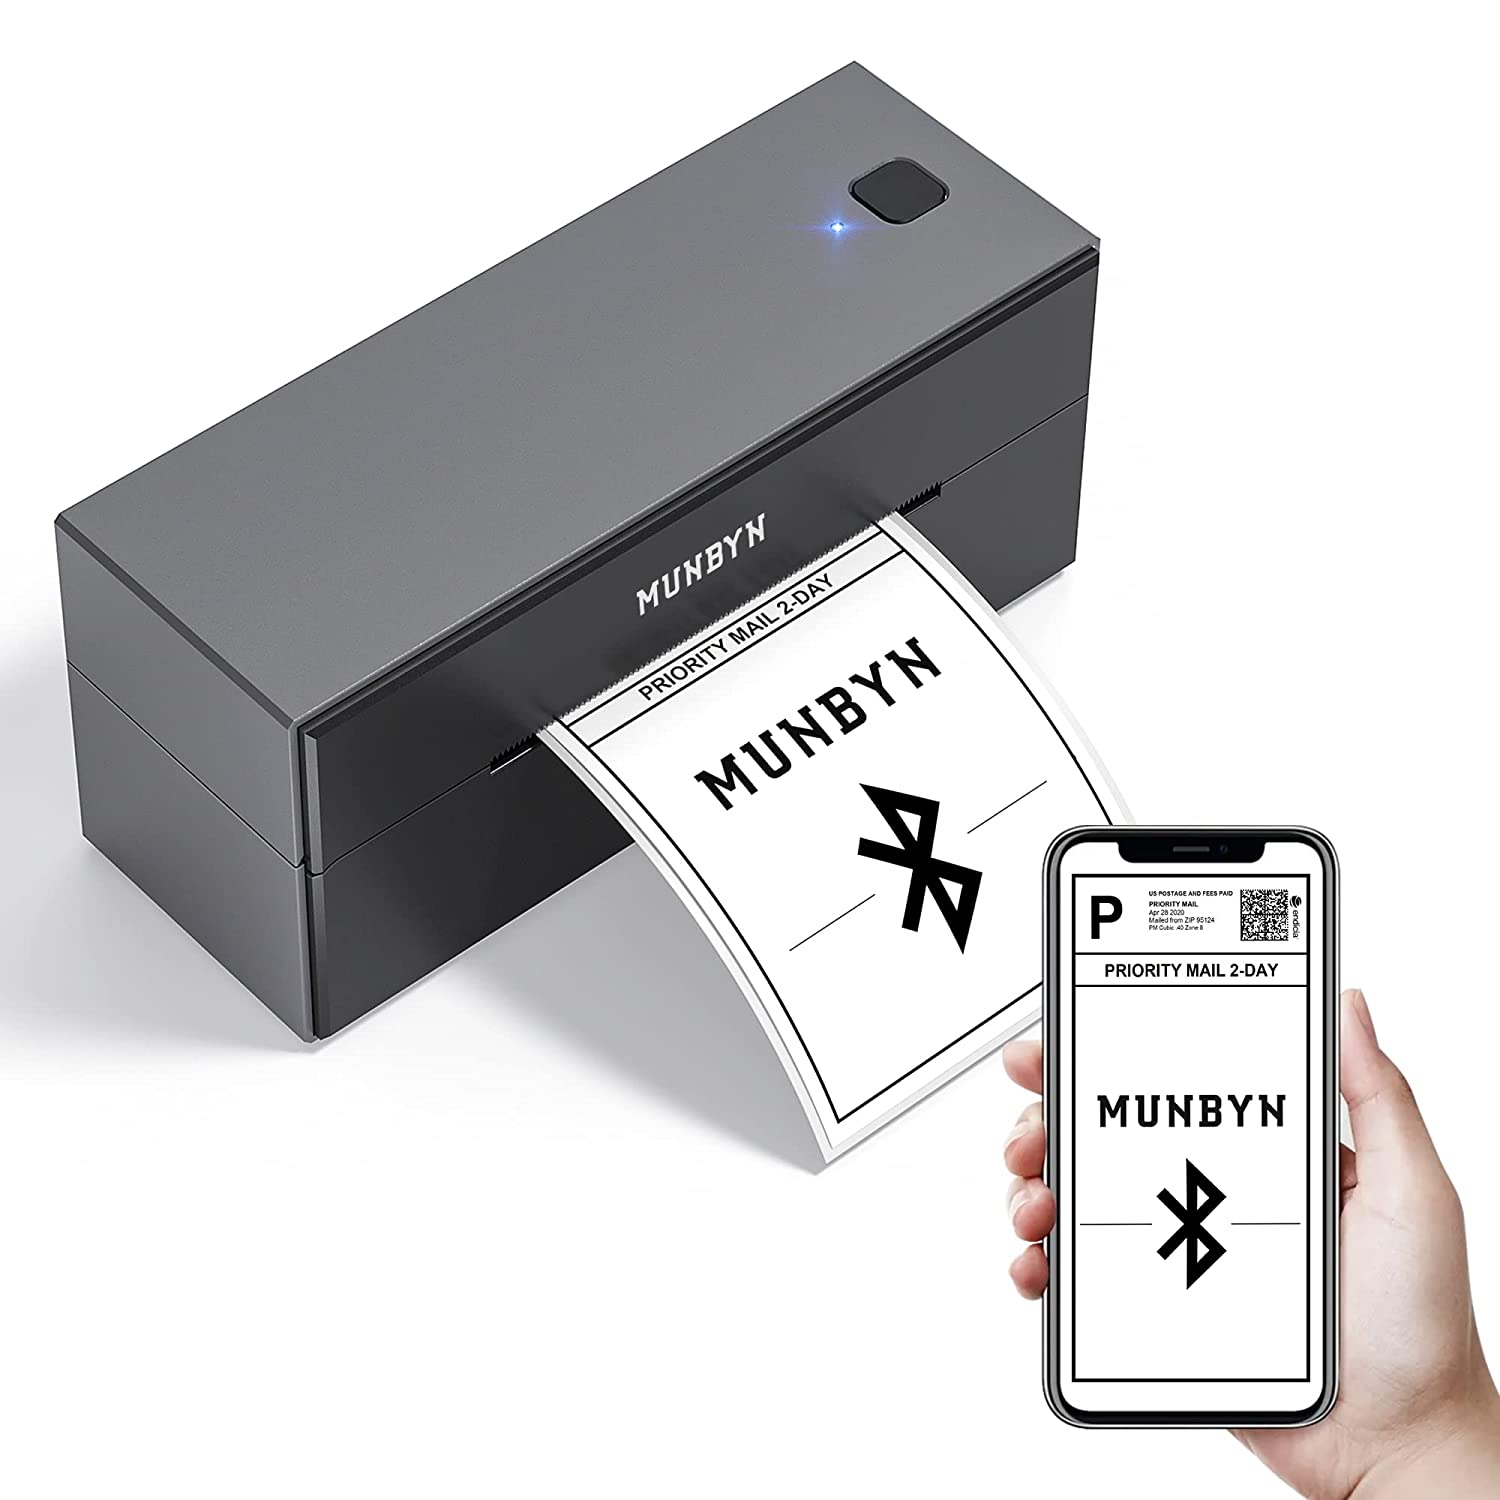 MUNBYN P129 black wireless Bluetooth thermal label printer